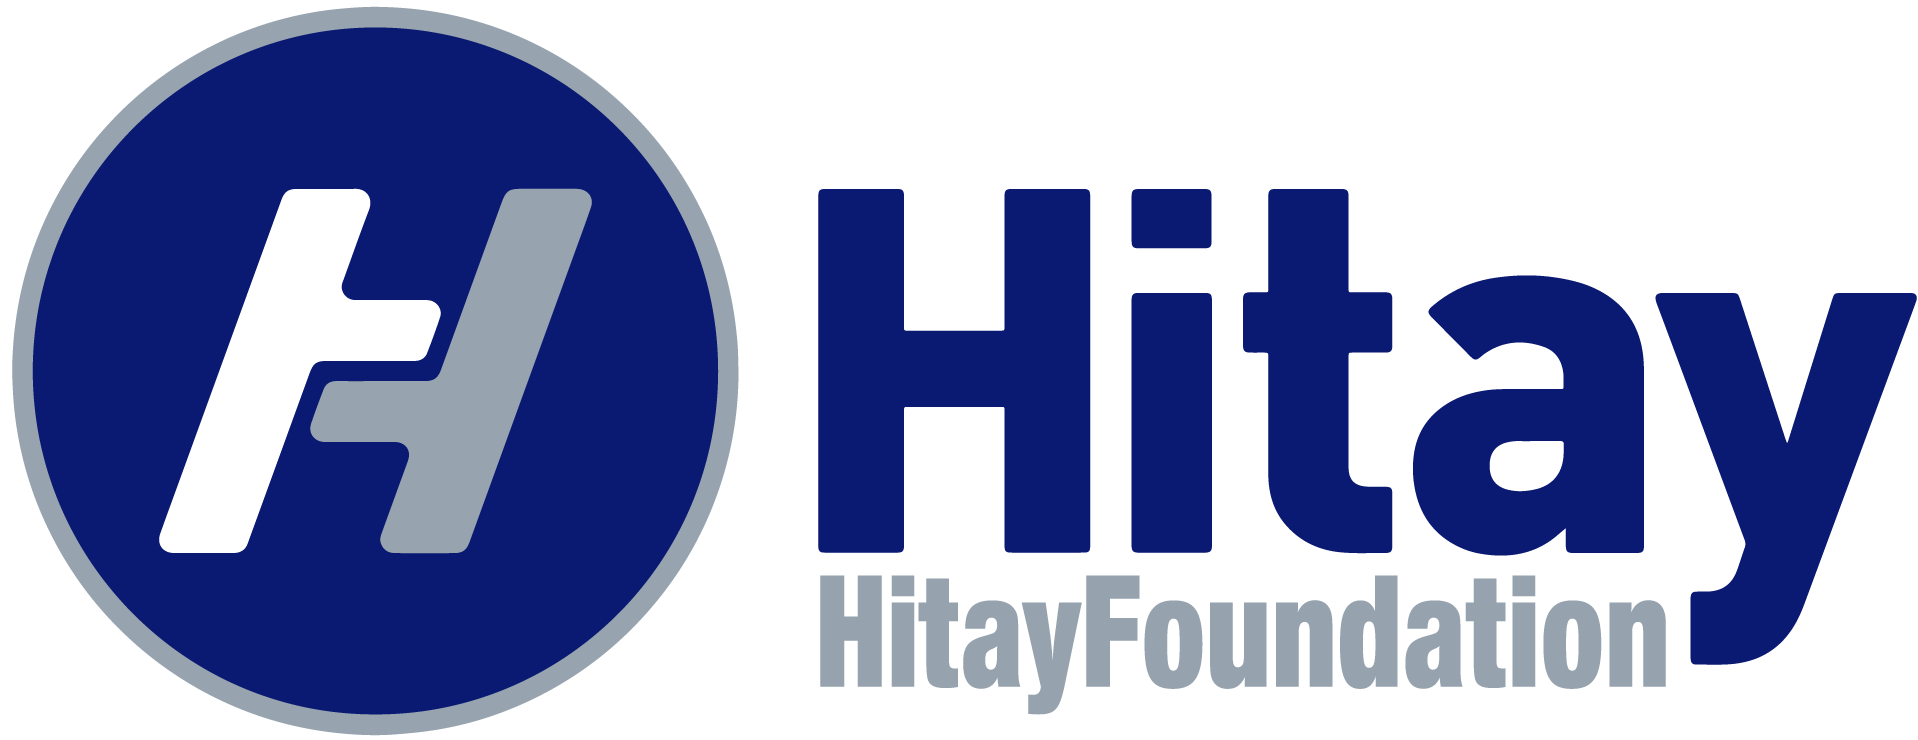 Hitay Foundation